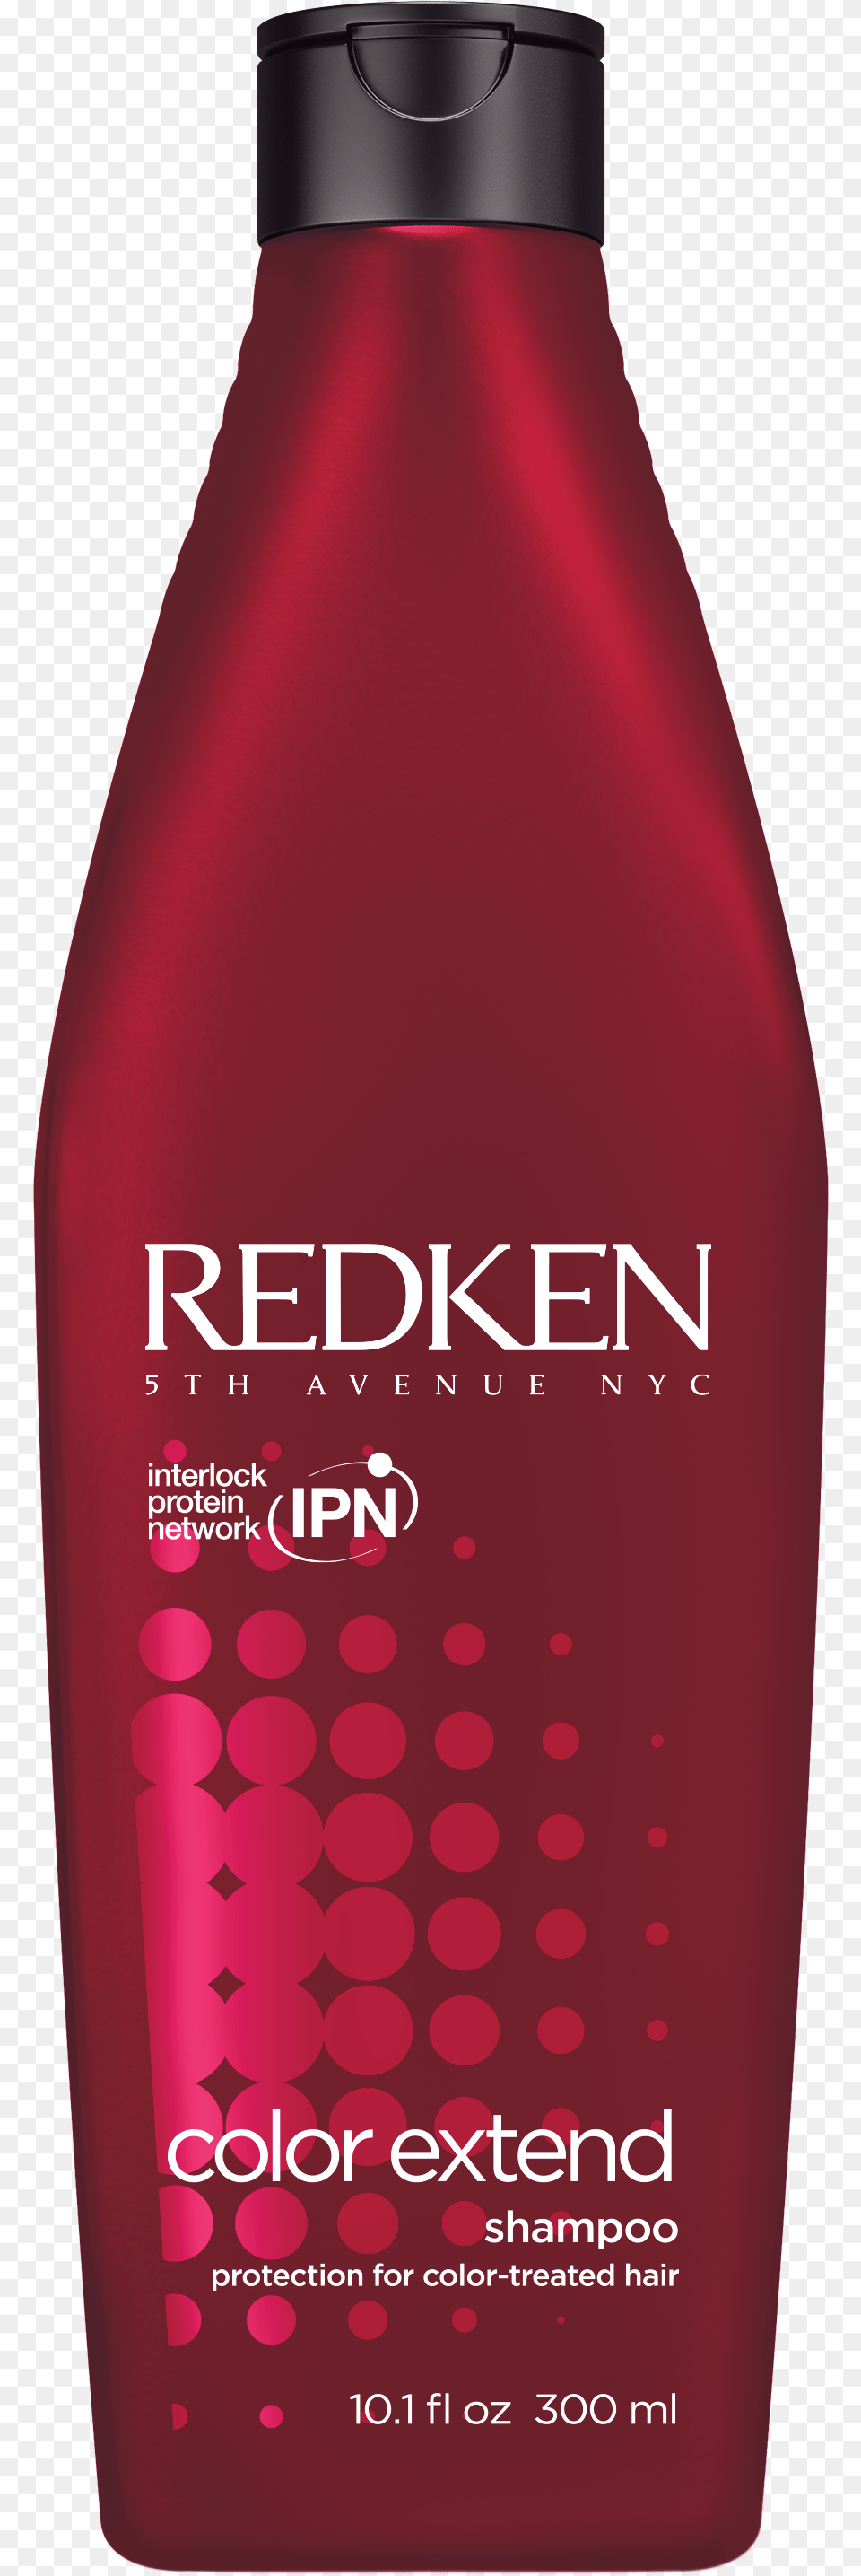 Redken Color Extend Shampoo Redken Extreme Conditioner 250 Ml 250 Ml, Bottle, Food, Ketchup Free Transparent Png